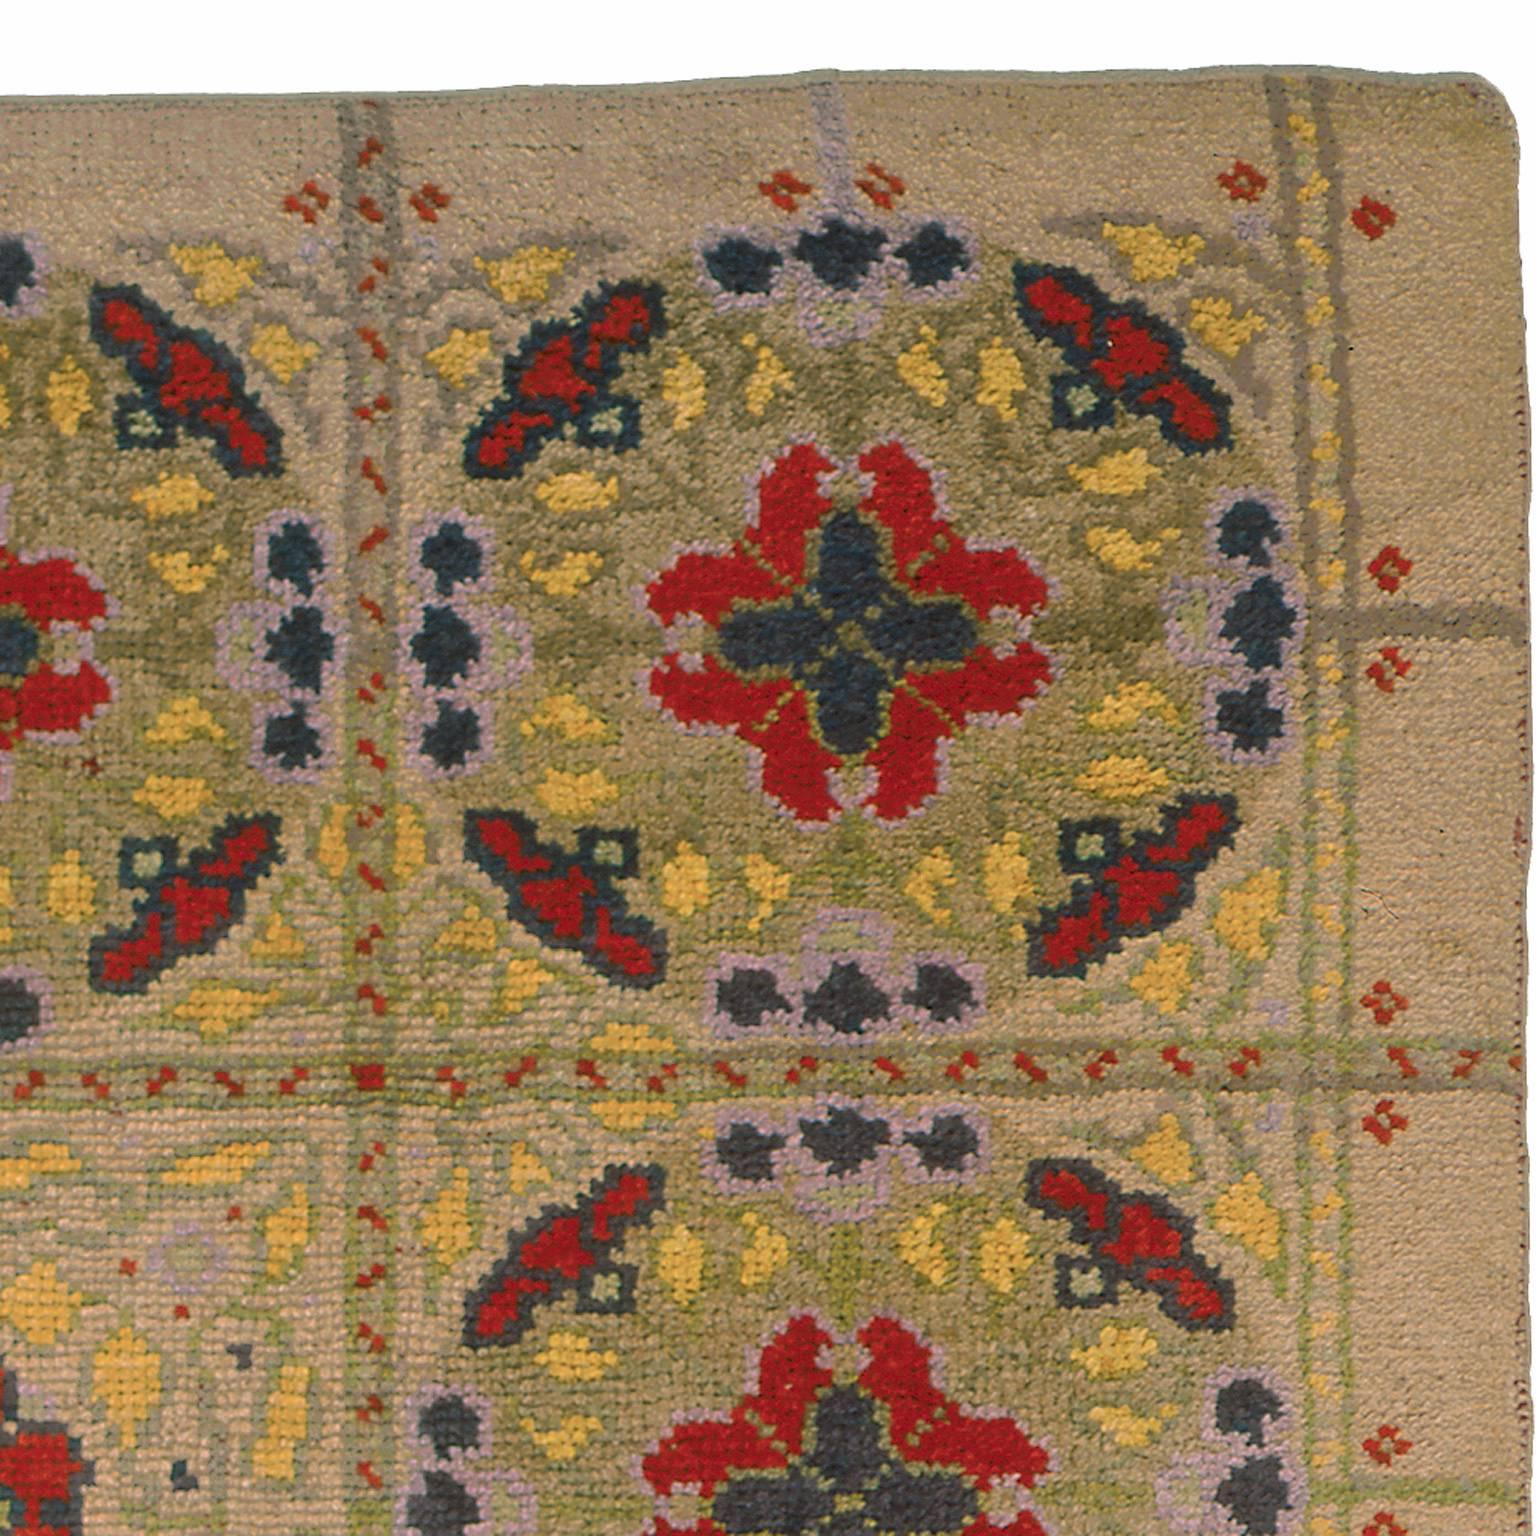 Early 20th century Swedish pile carpet.